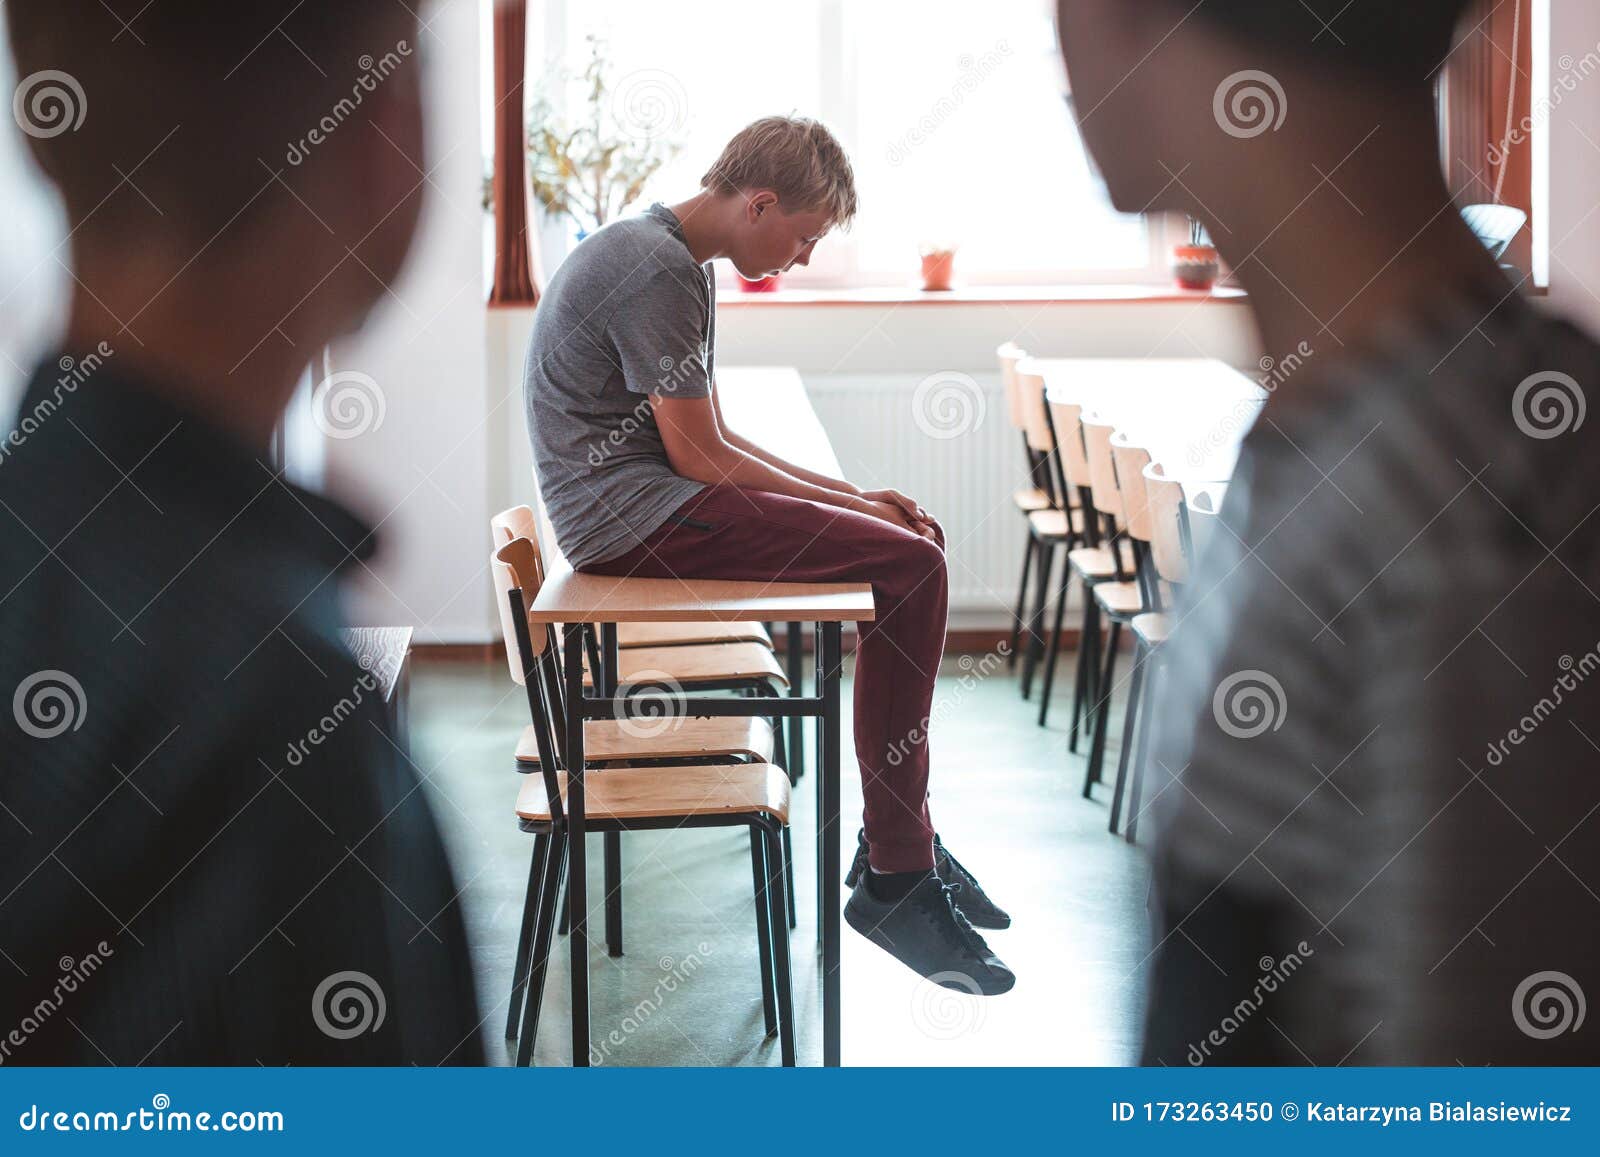 sad boy sitting alone at school, bullying among children concept